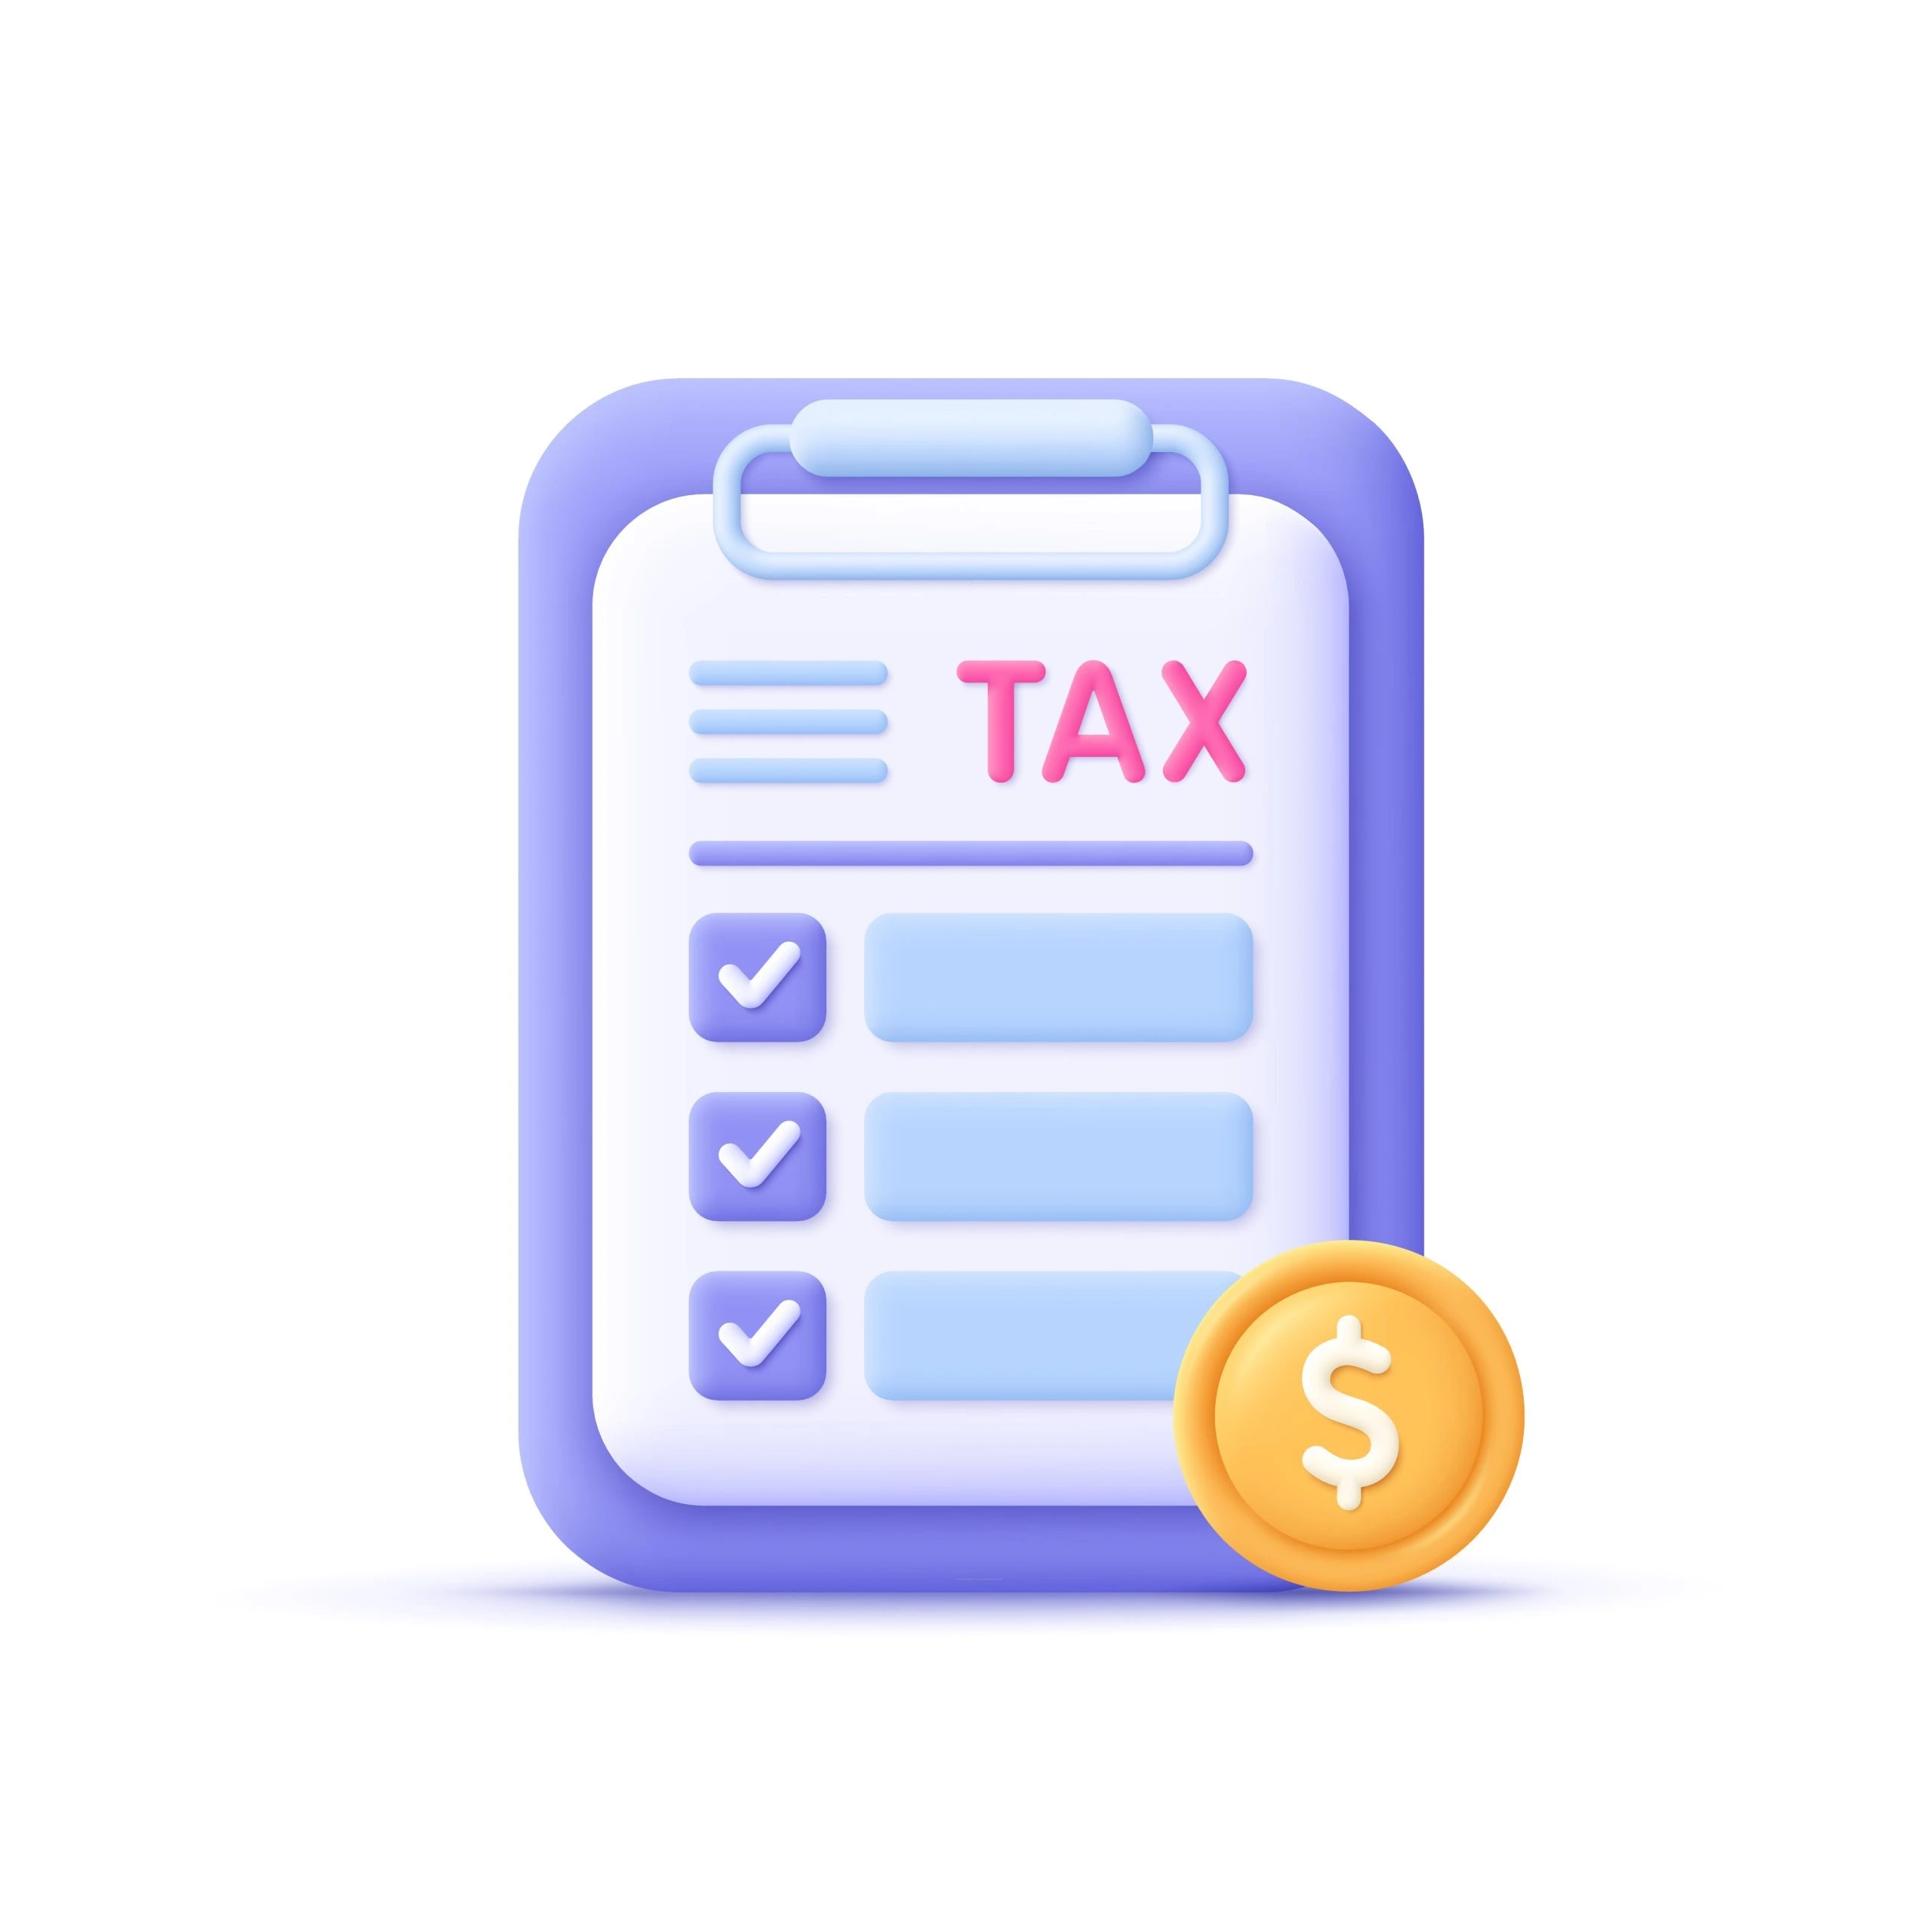 ITR filing income tax return